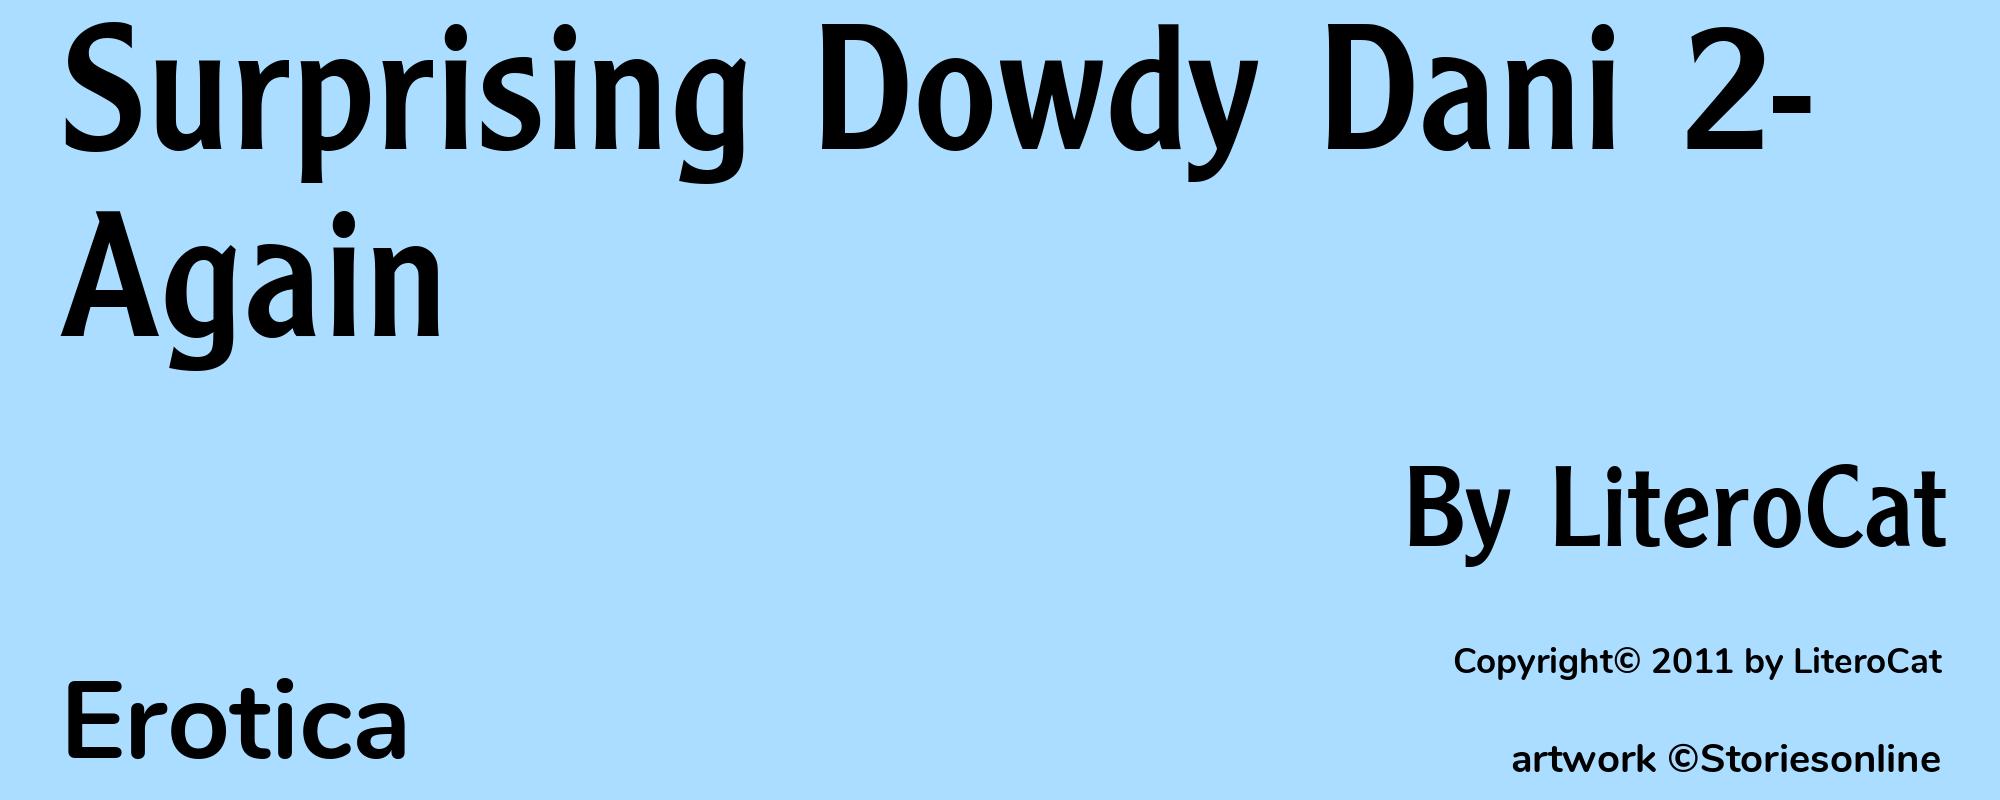 Surprising Dowdy Dani 2- Again - Cover